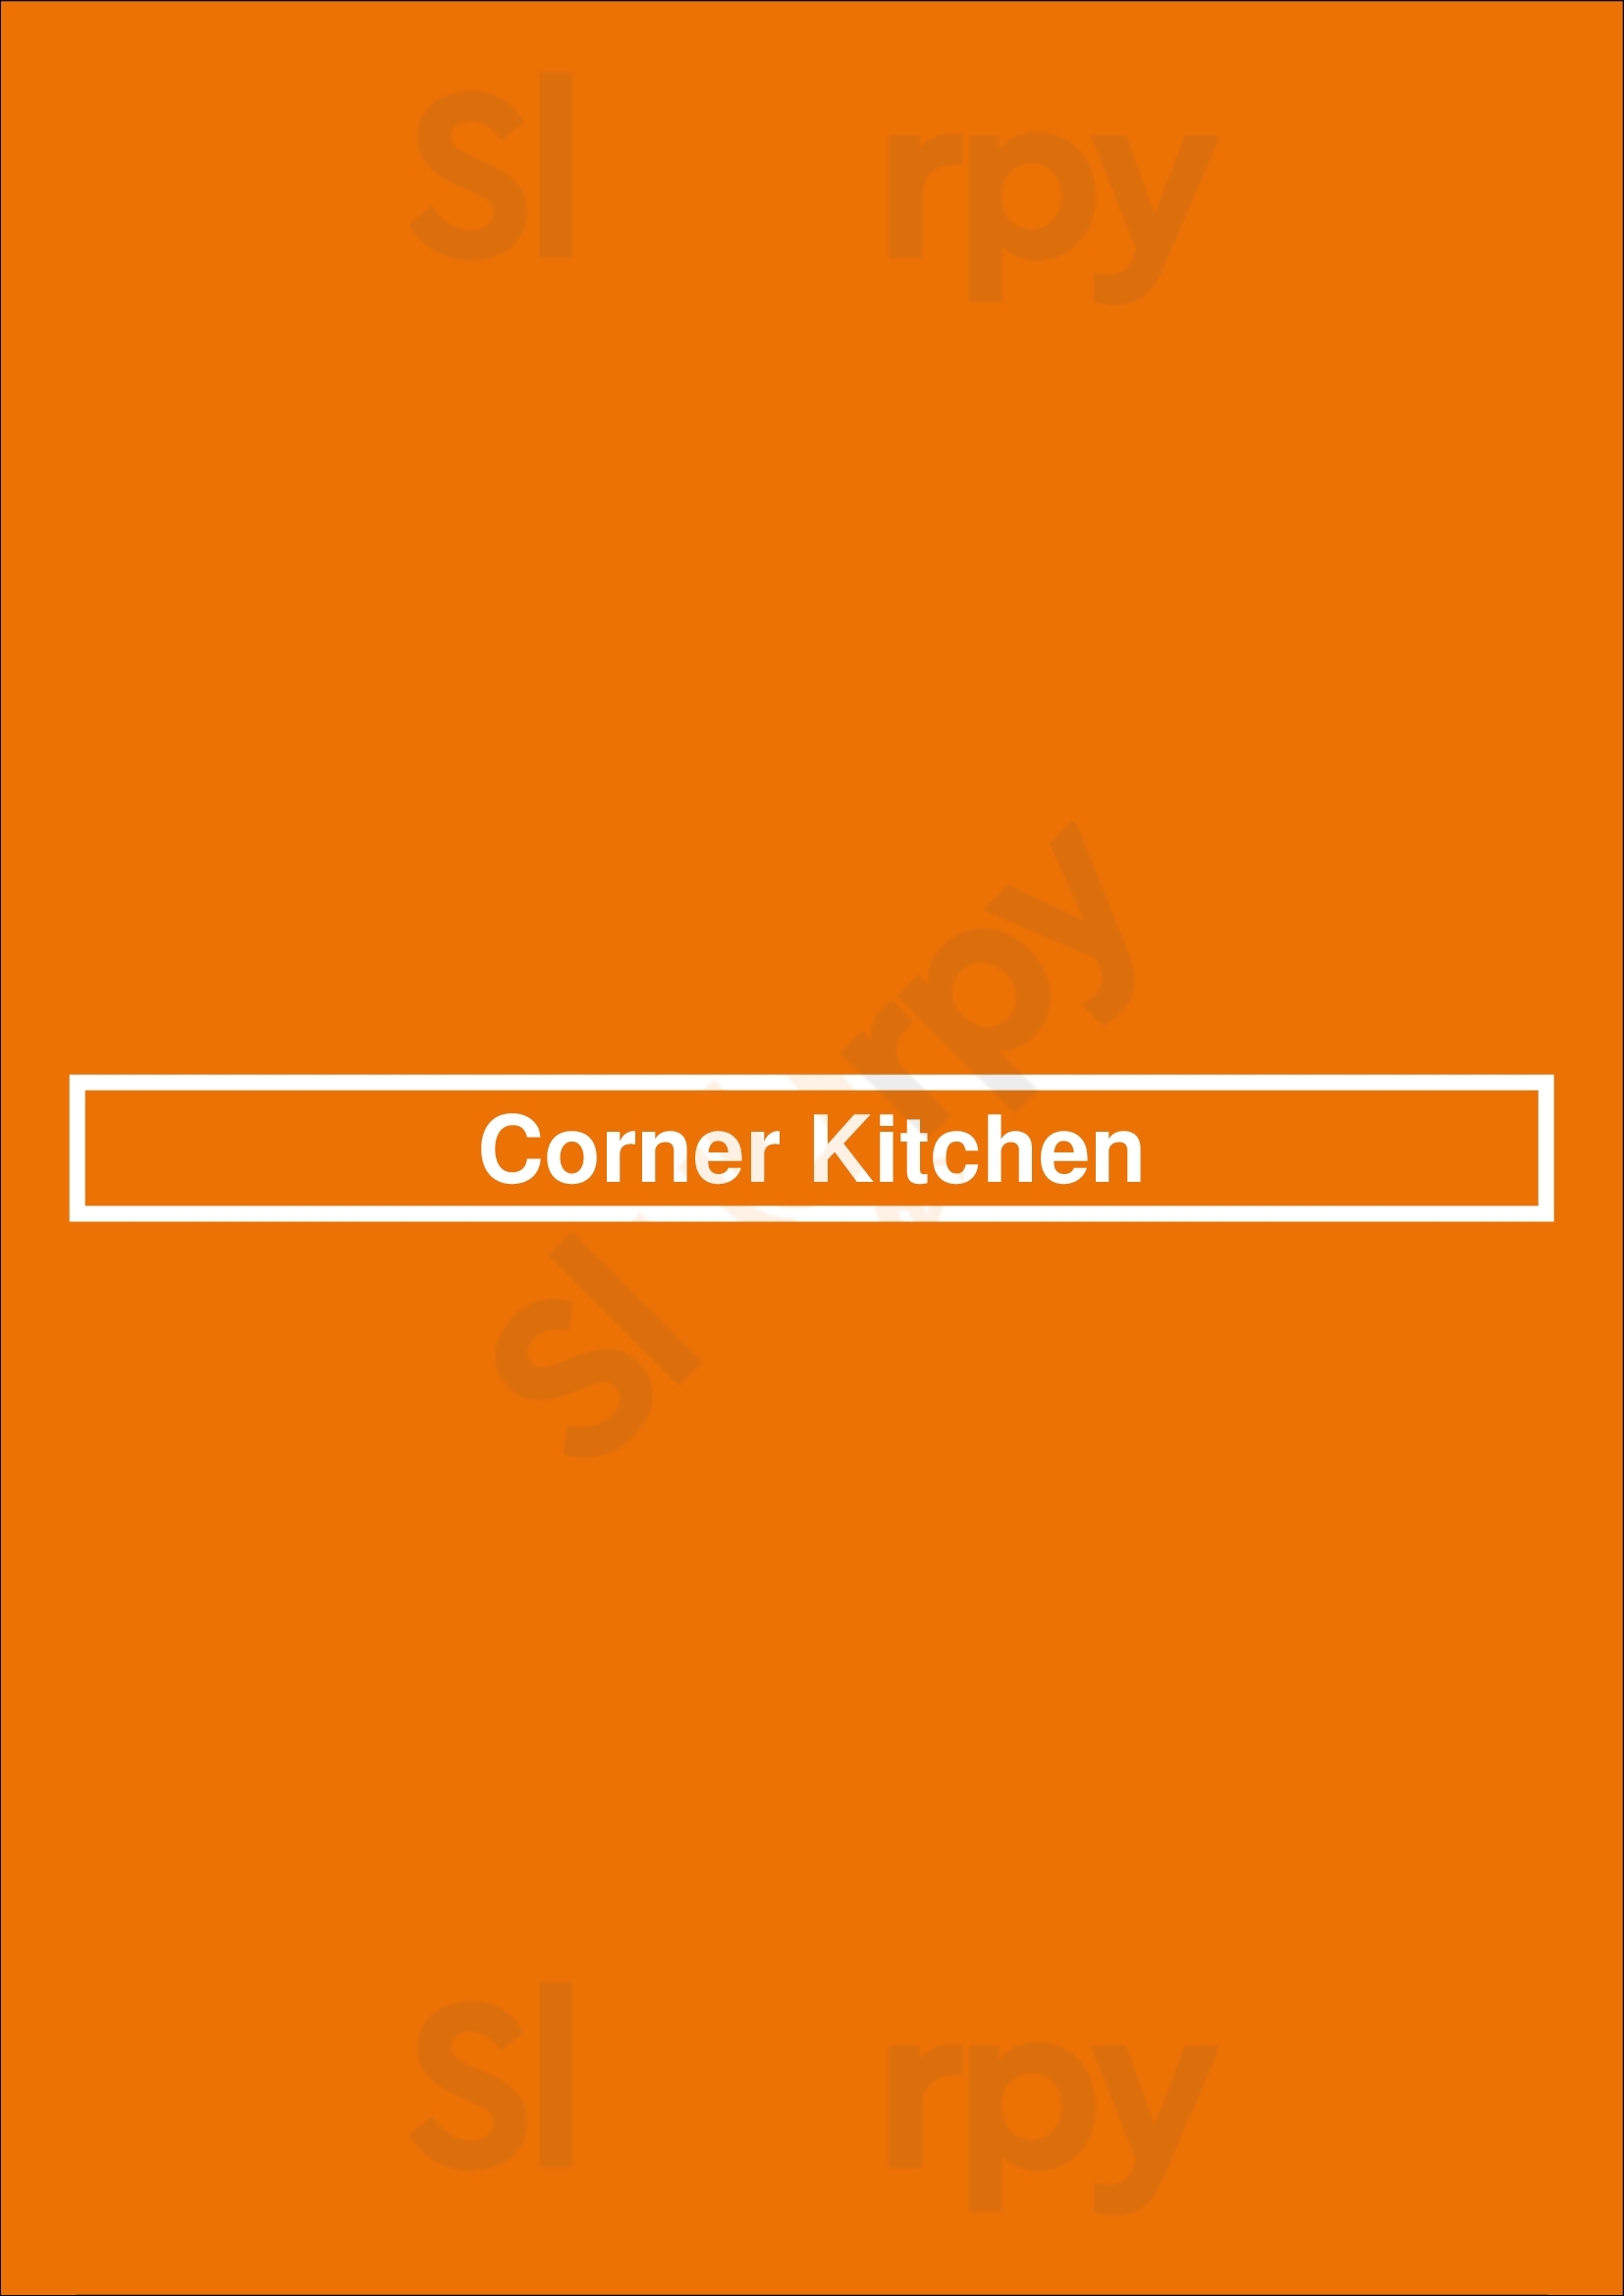 Corner Kitchen Long Beach Menu - 1